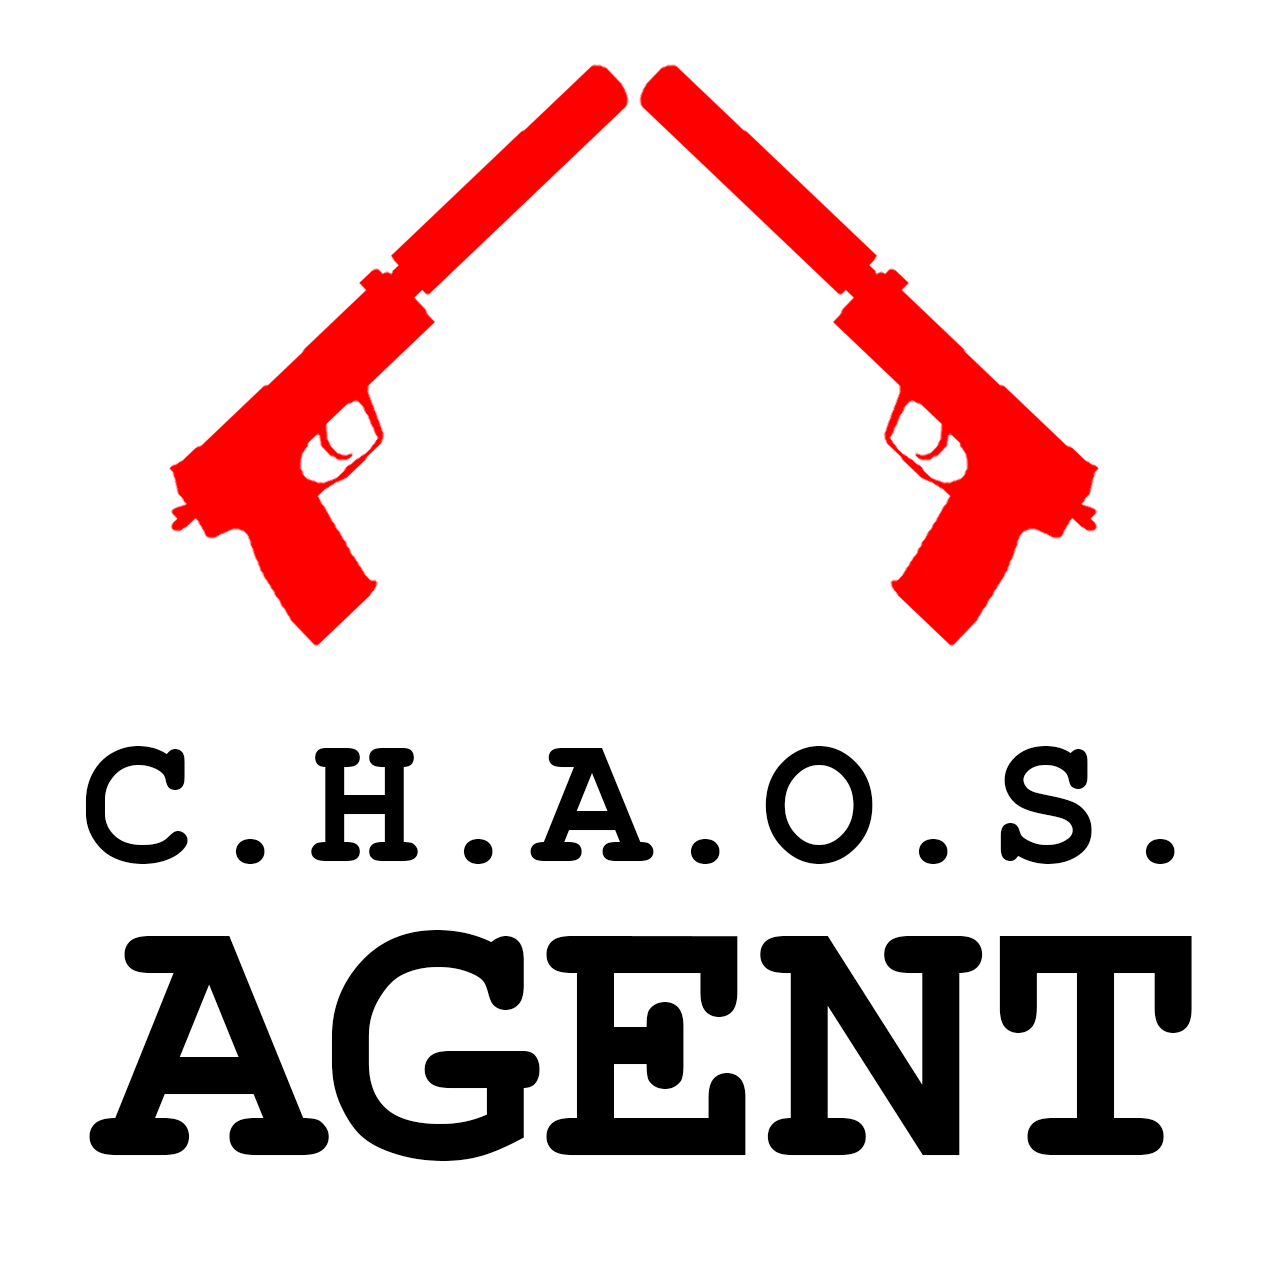 The C.H.A.O.S agent